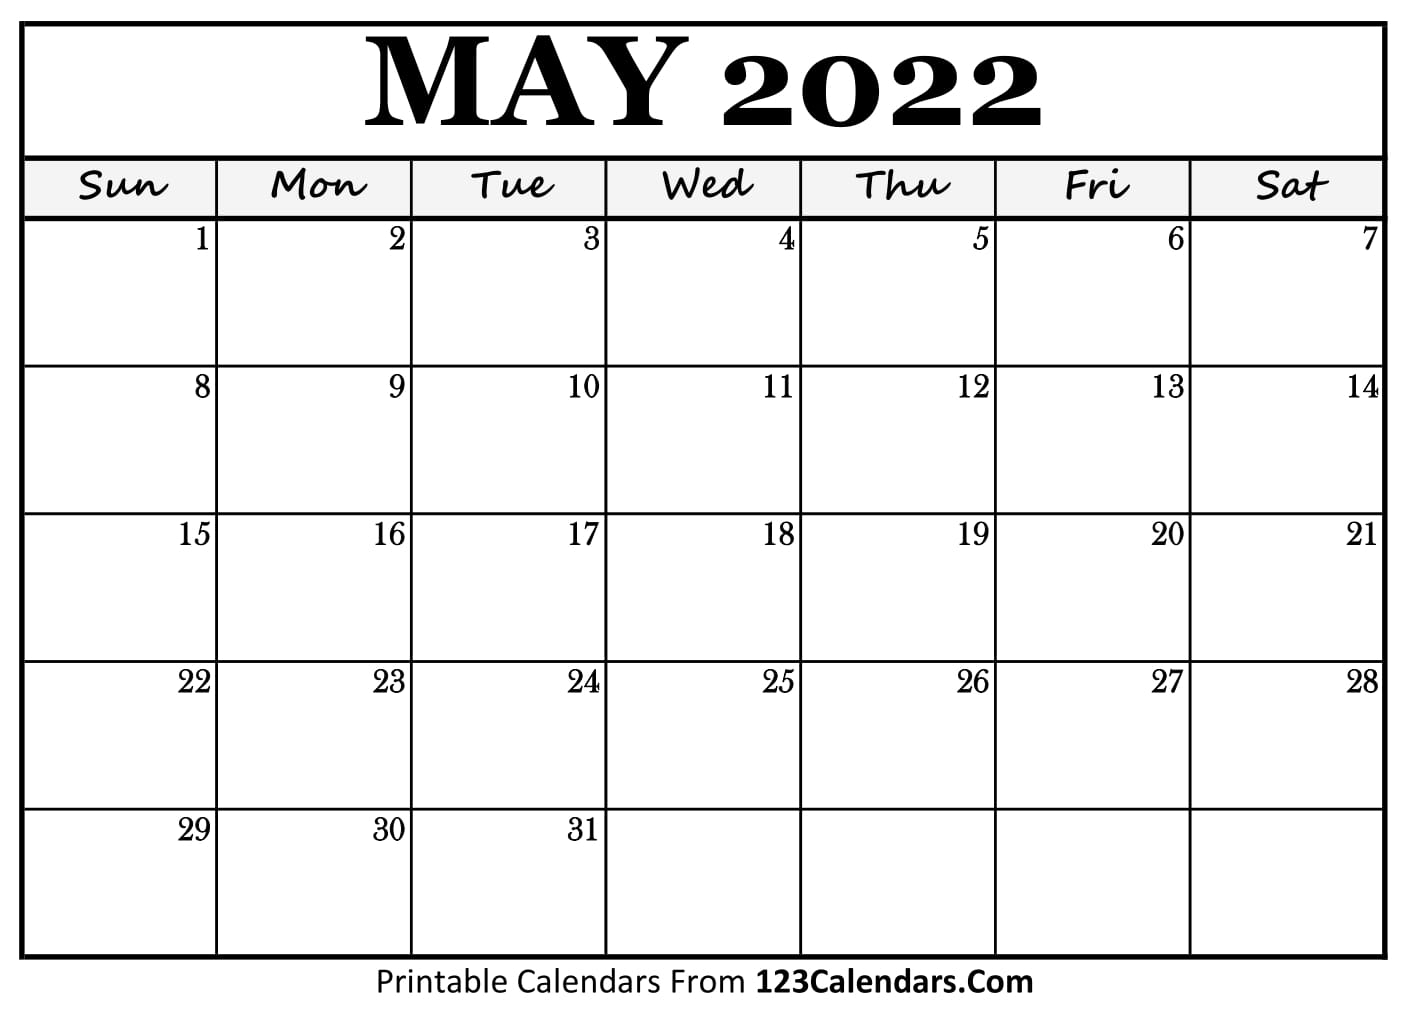 Editable Calendar May 2022 Printable May 2022 Calendar Templates - 123Calendars.com